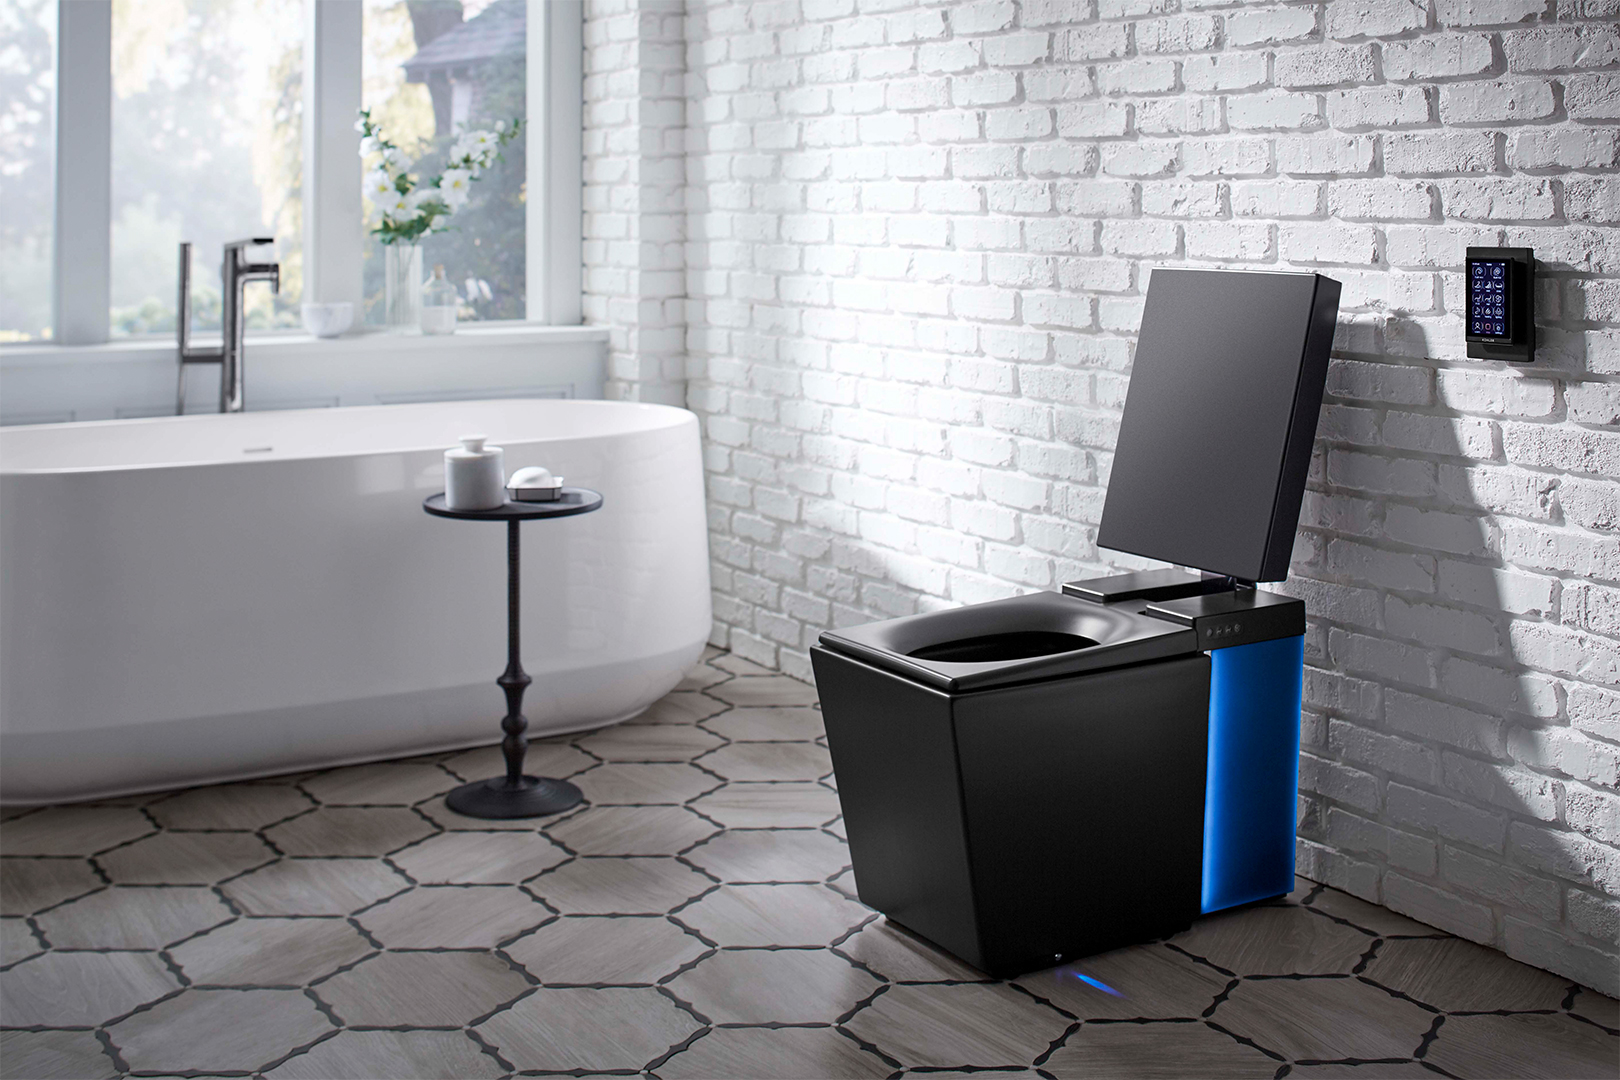 black geometric intelligent toilet with lid up revealing blue light